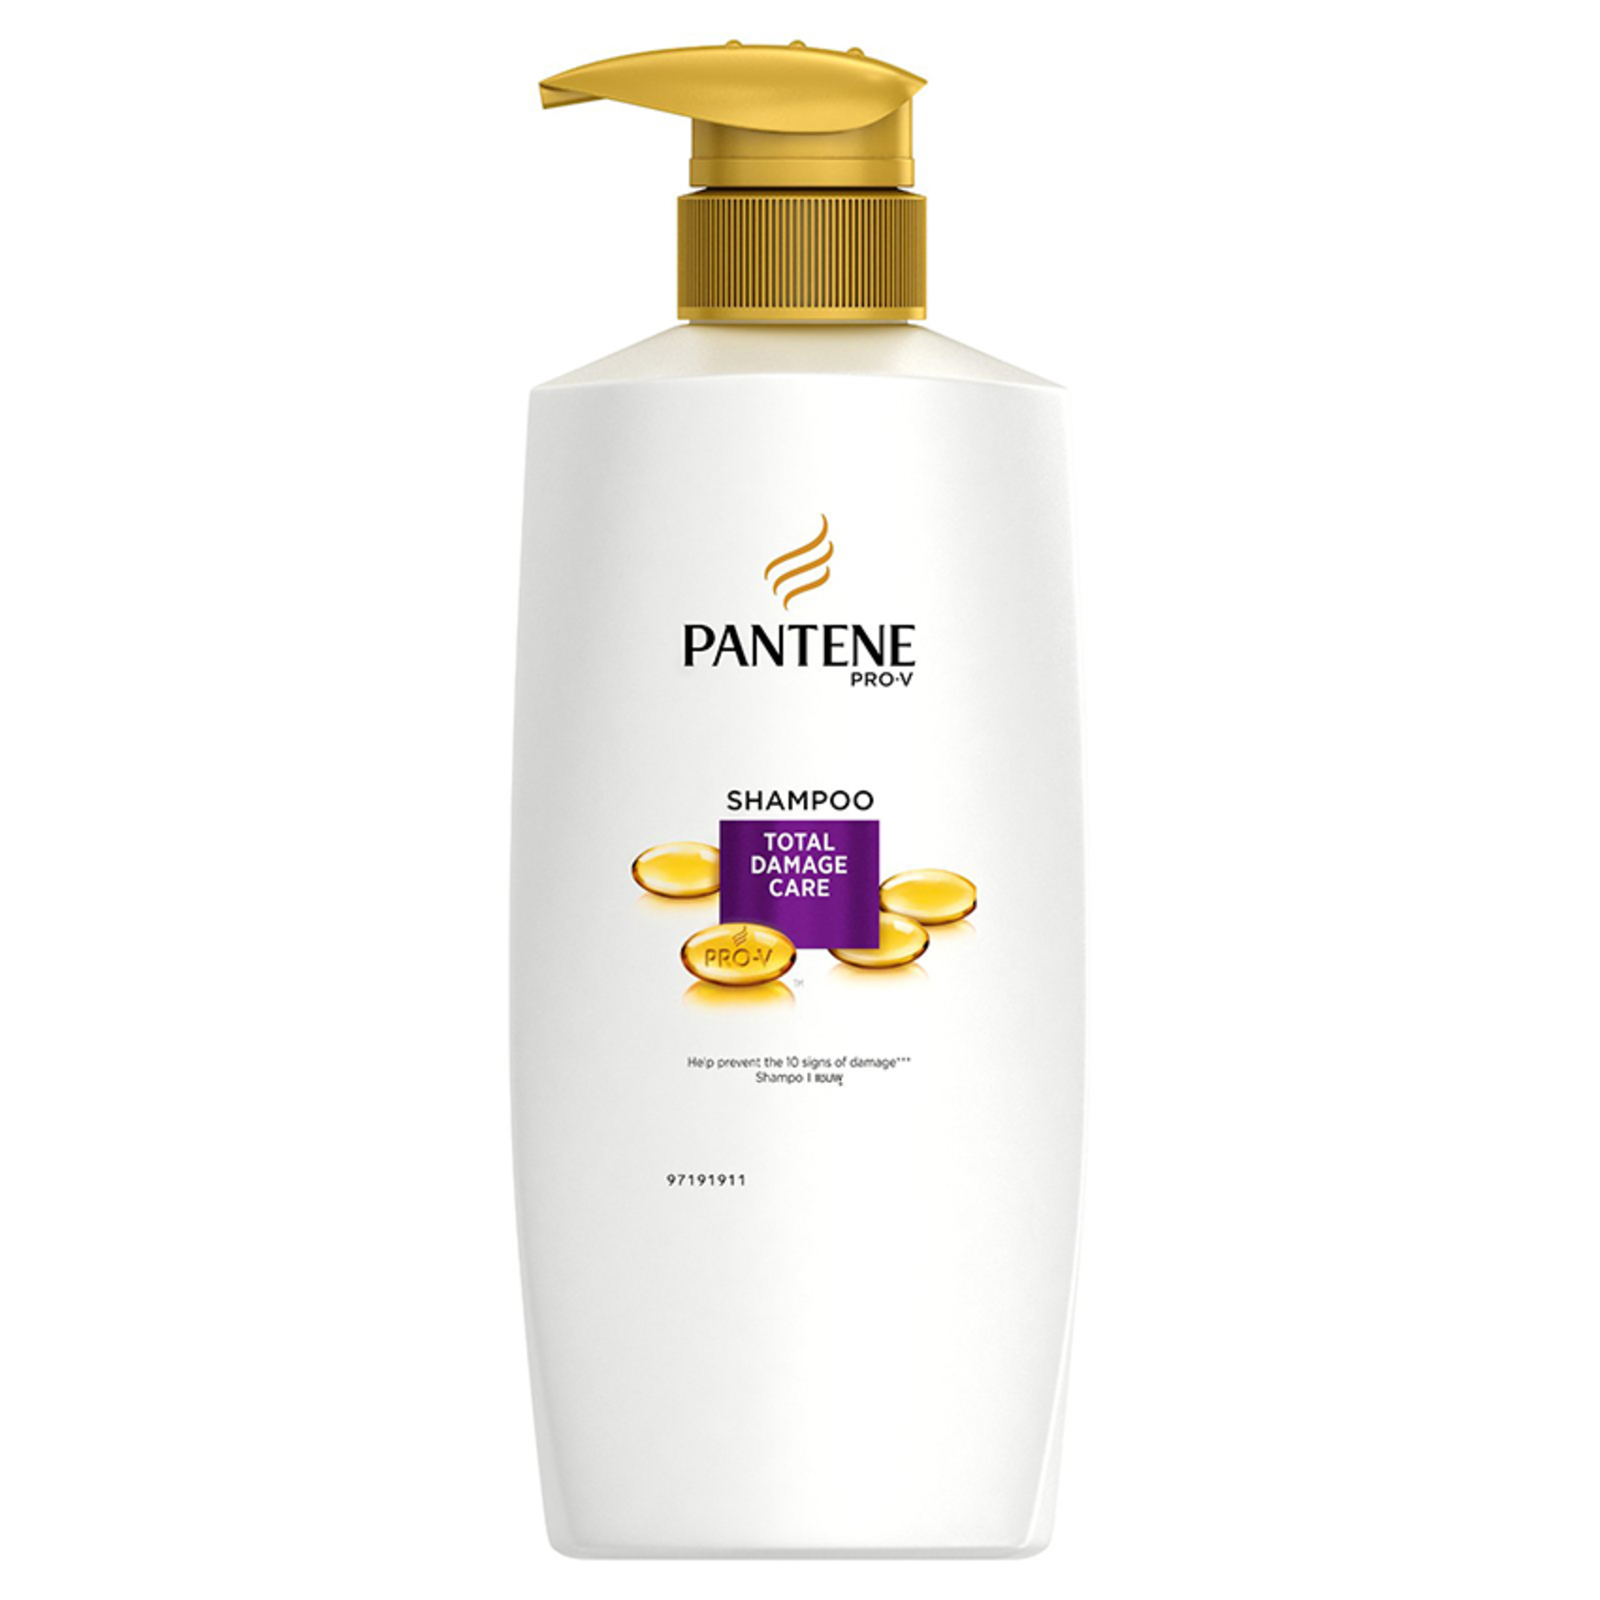 Pantene shampoo Total Damage care 900ml